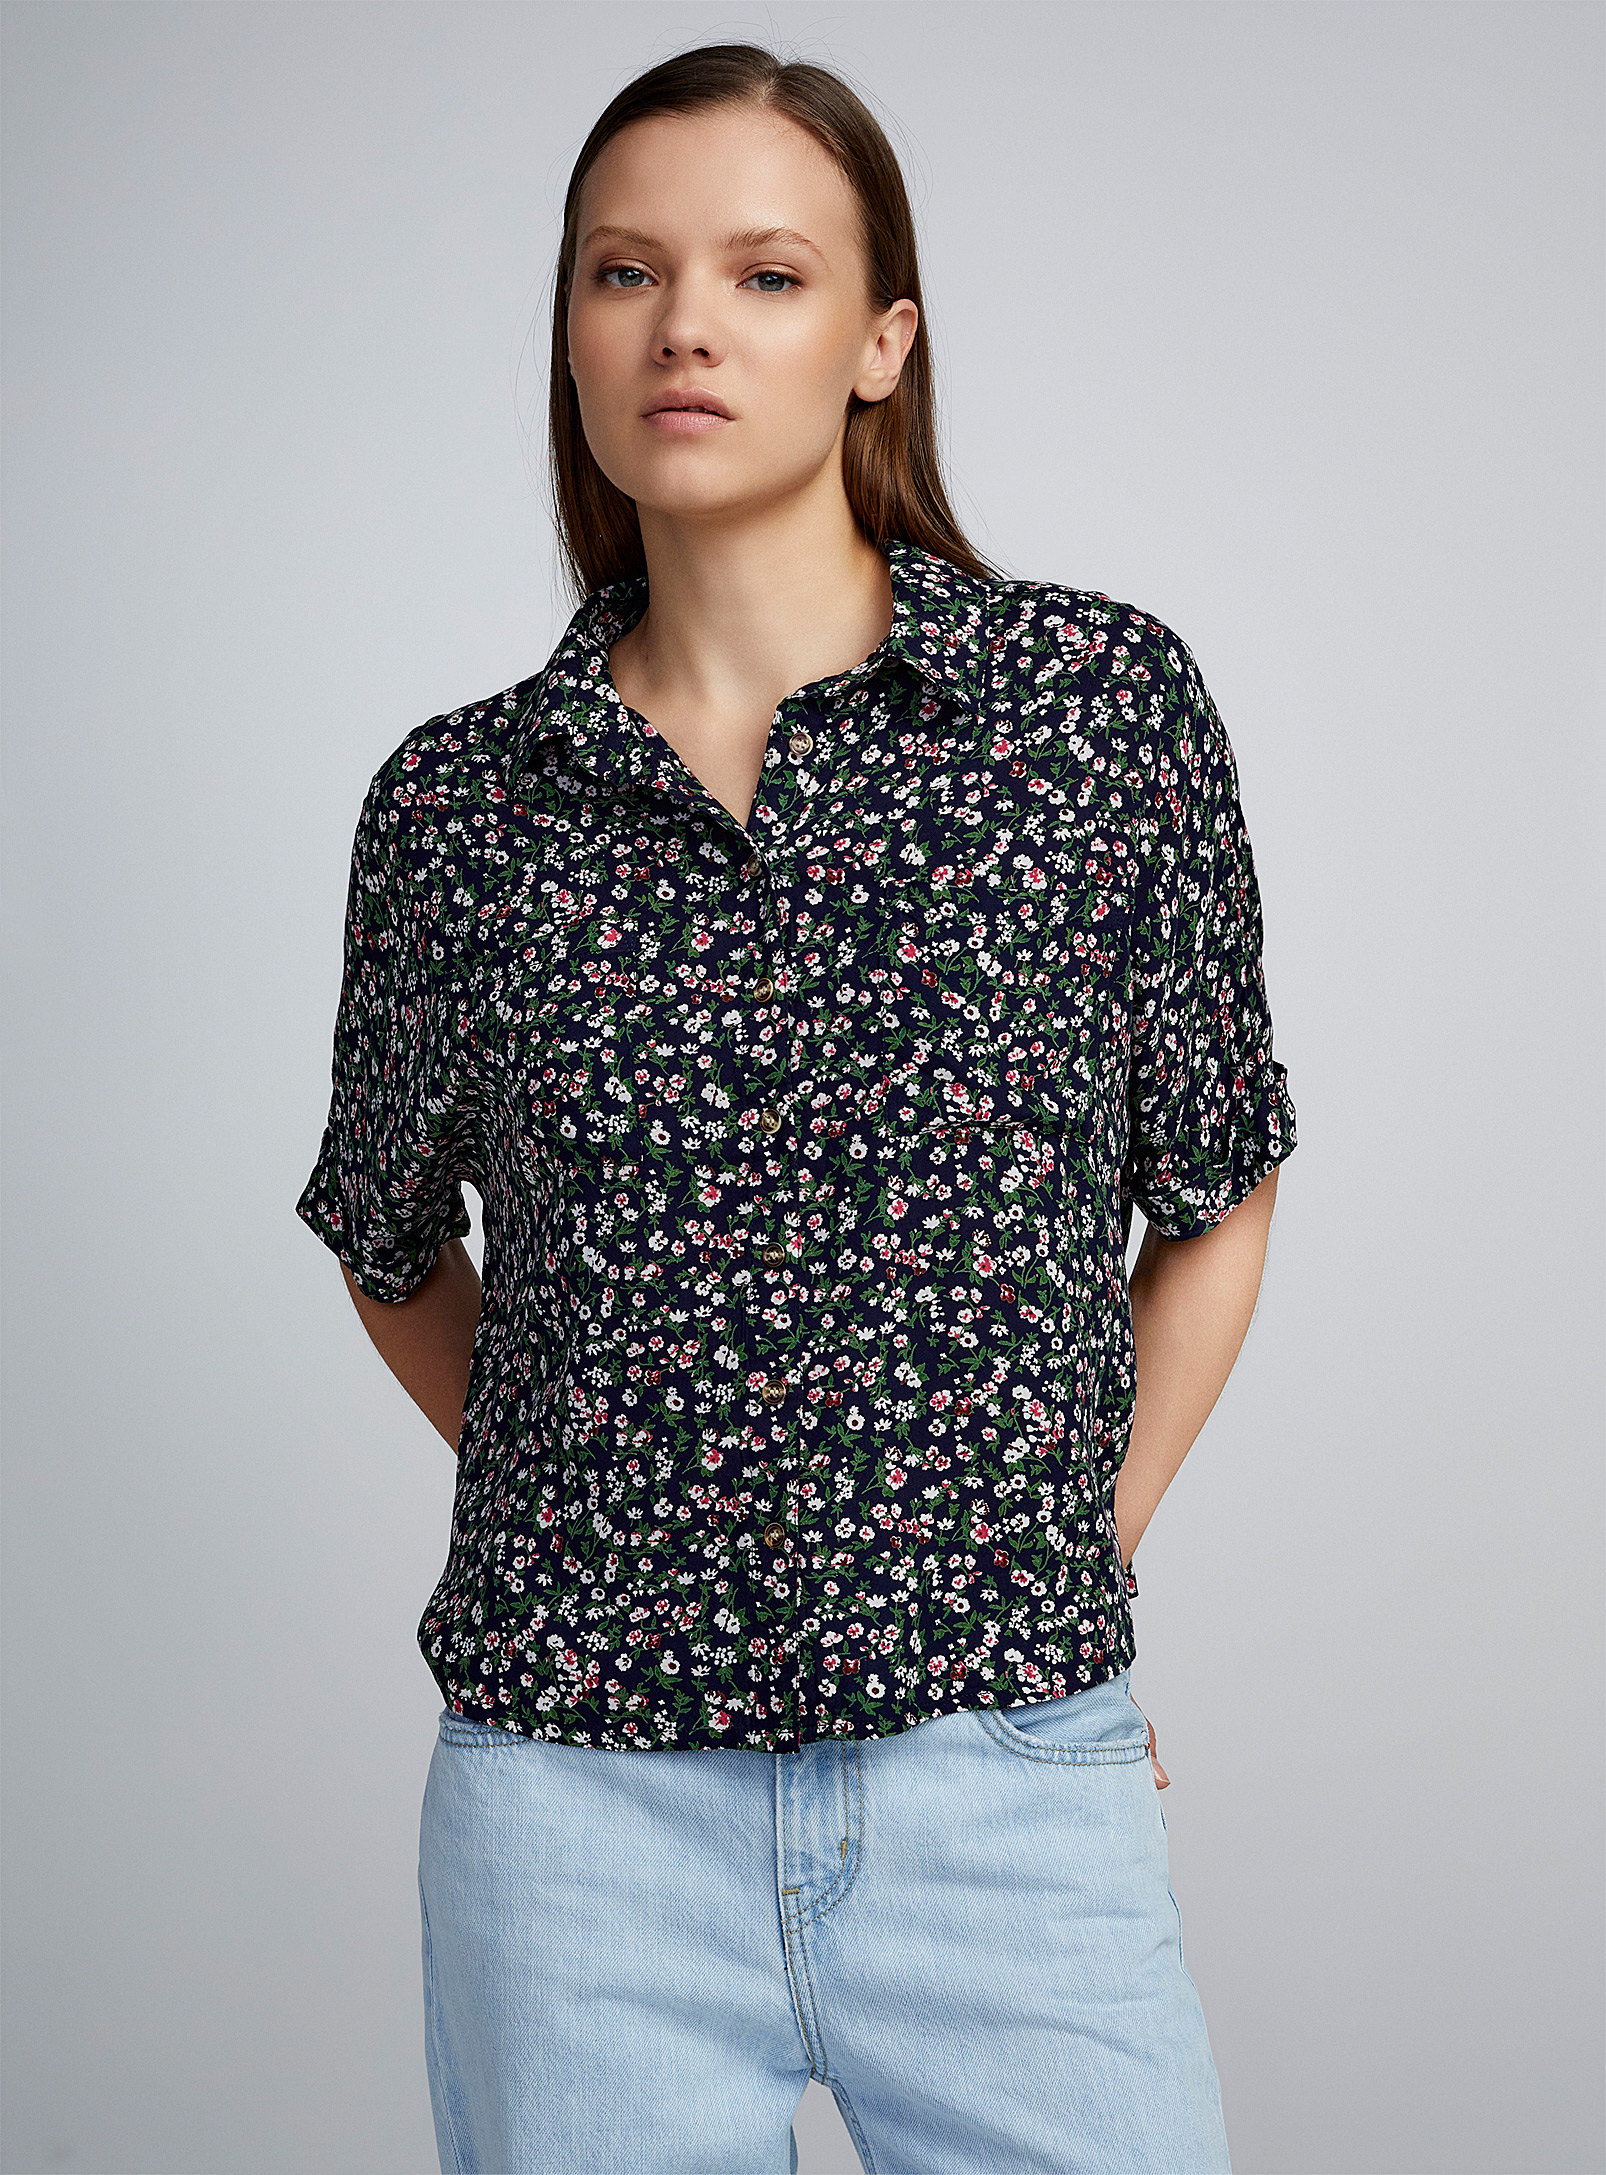 Twik - Women's Printed square shirt